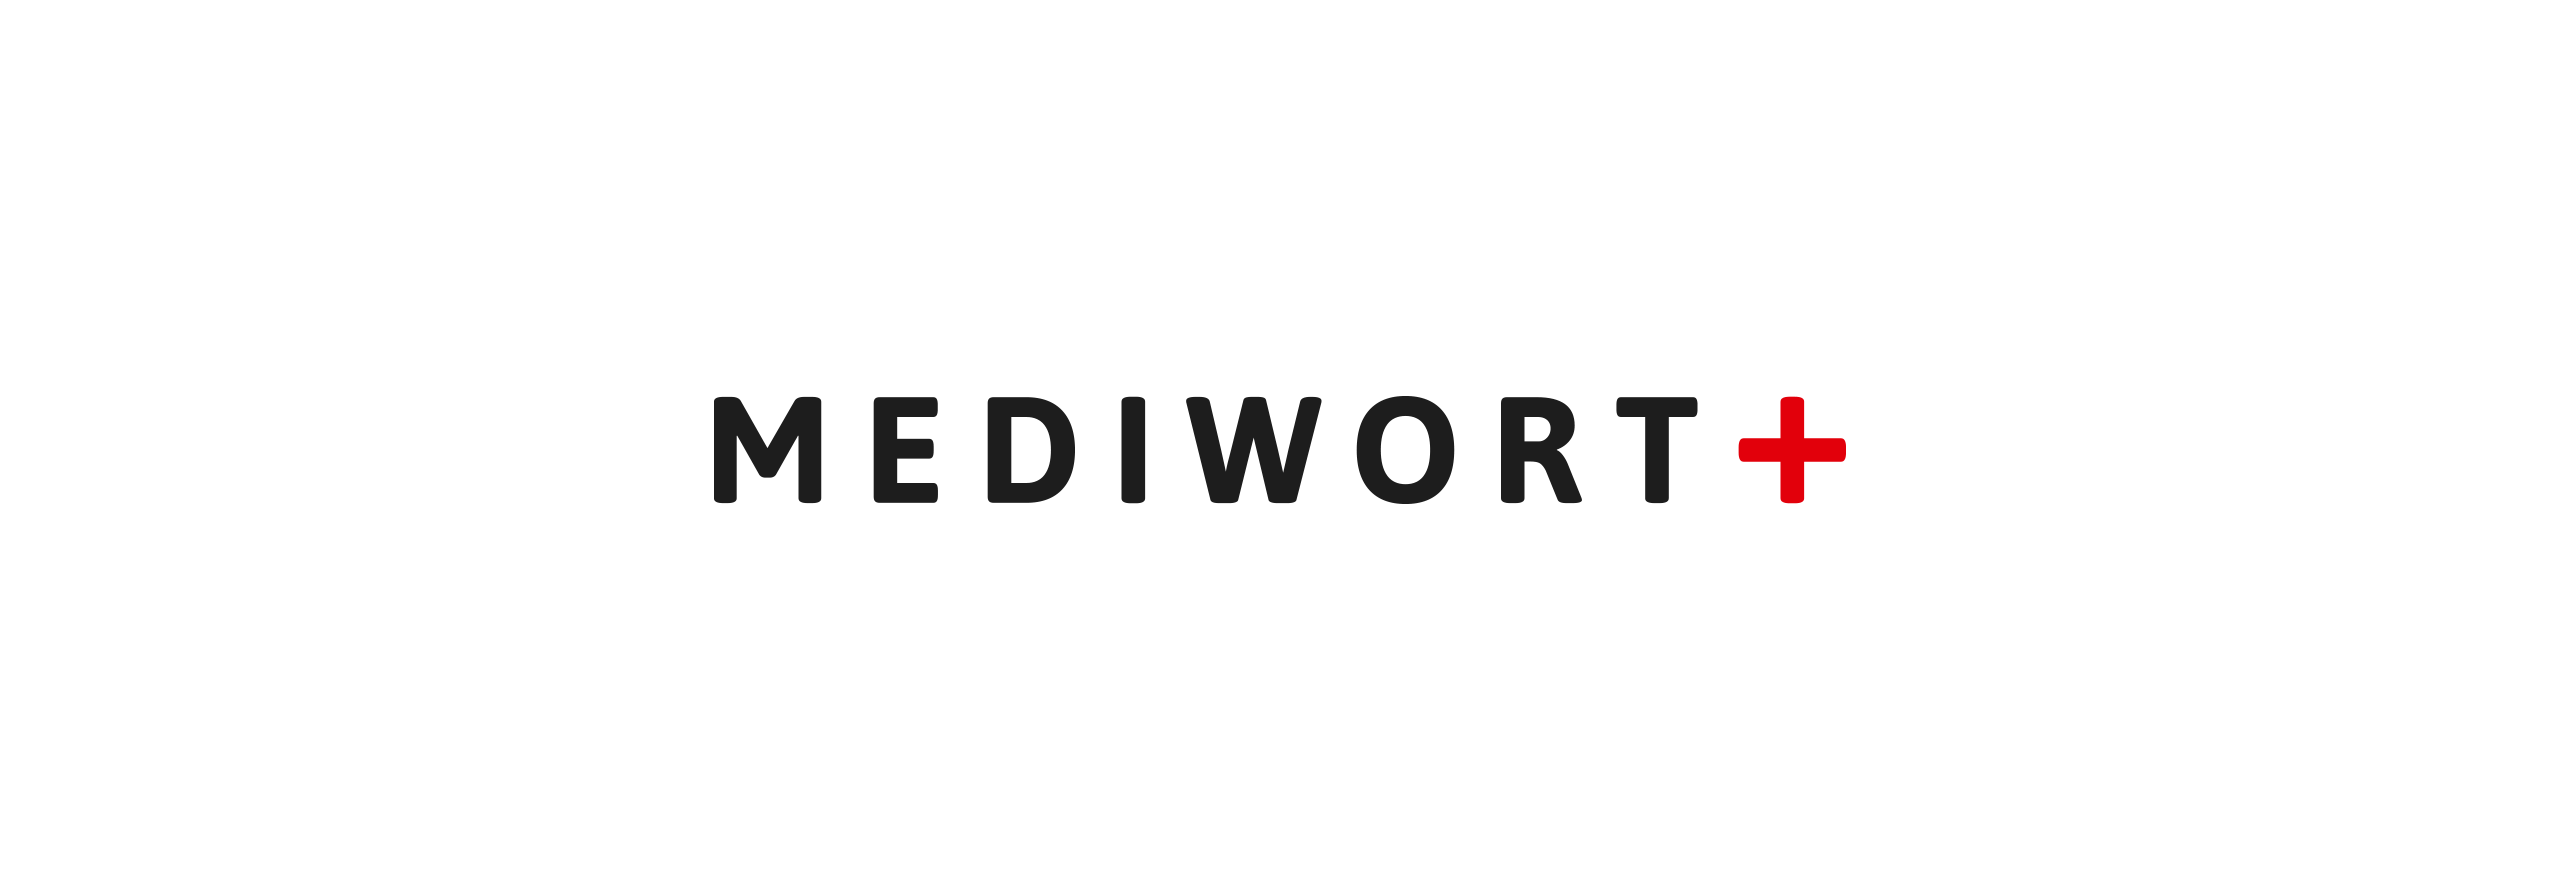 mediwort logo